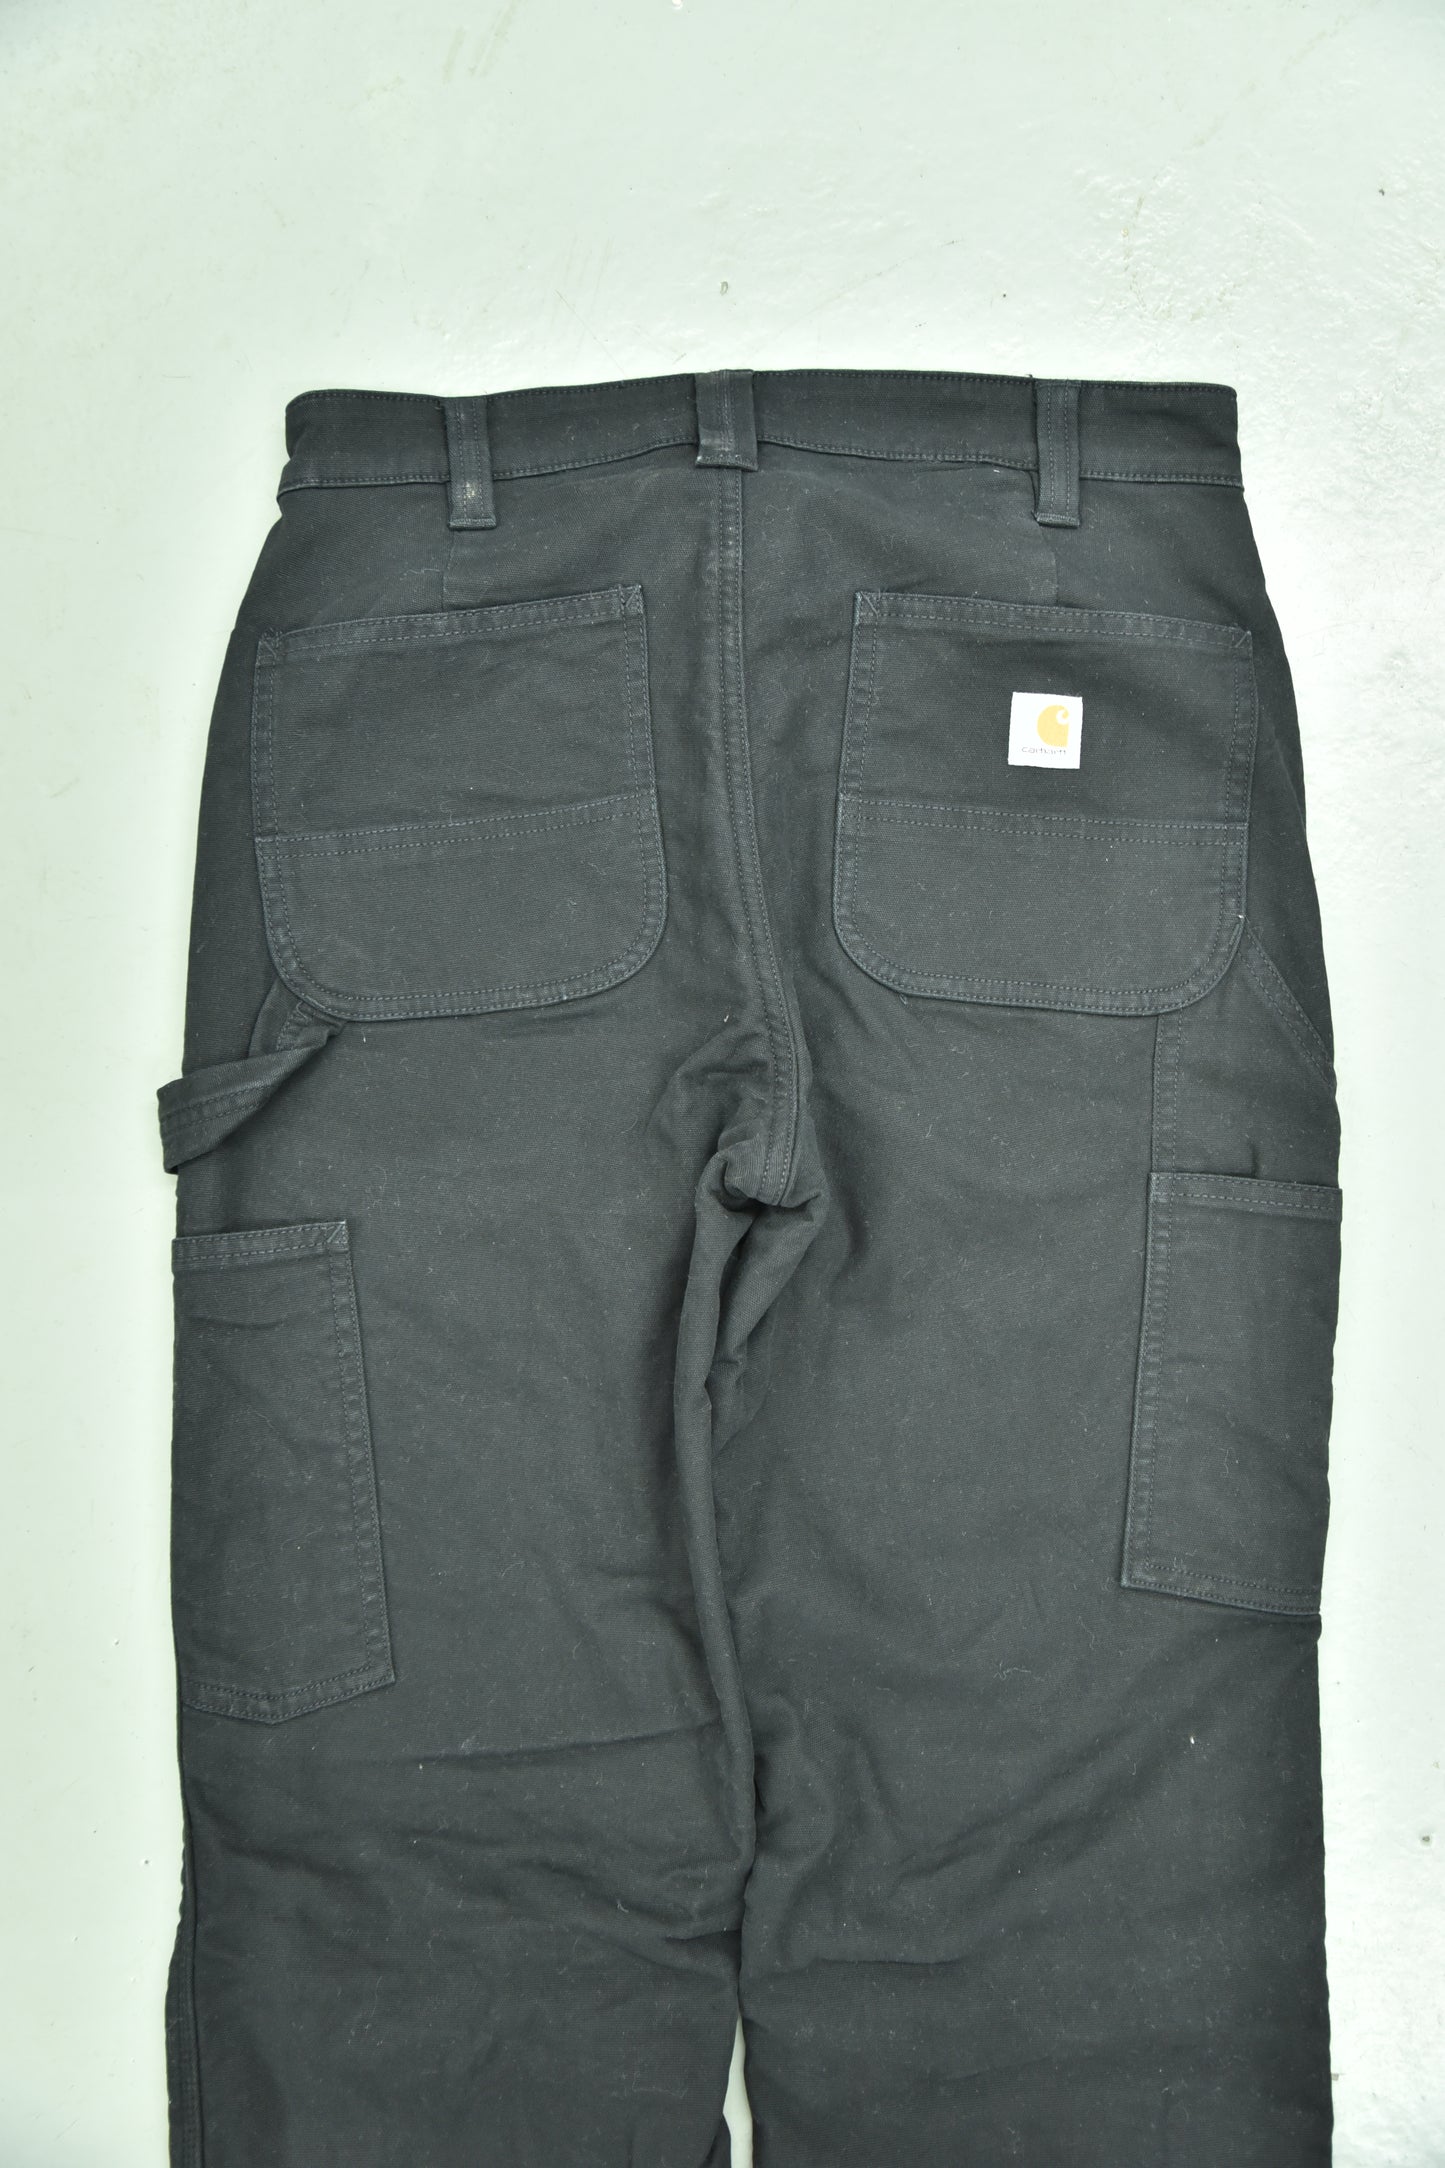 Carhartt Workwear Lined Pants Black / 28x30